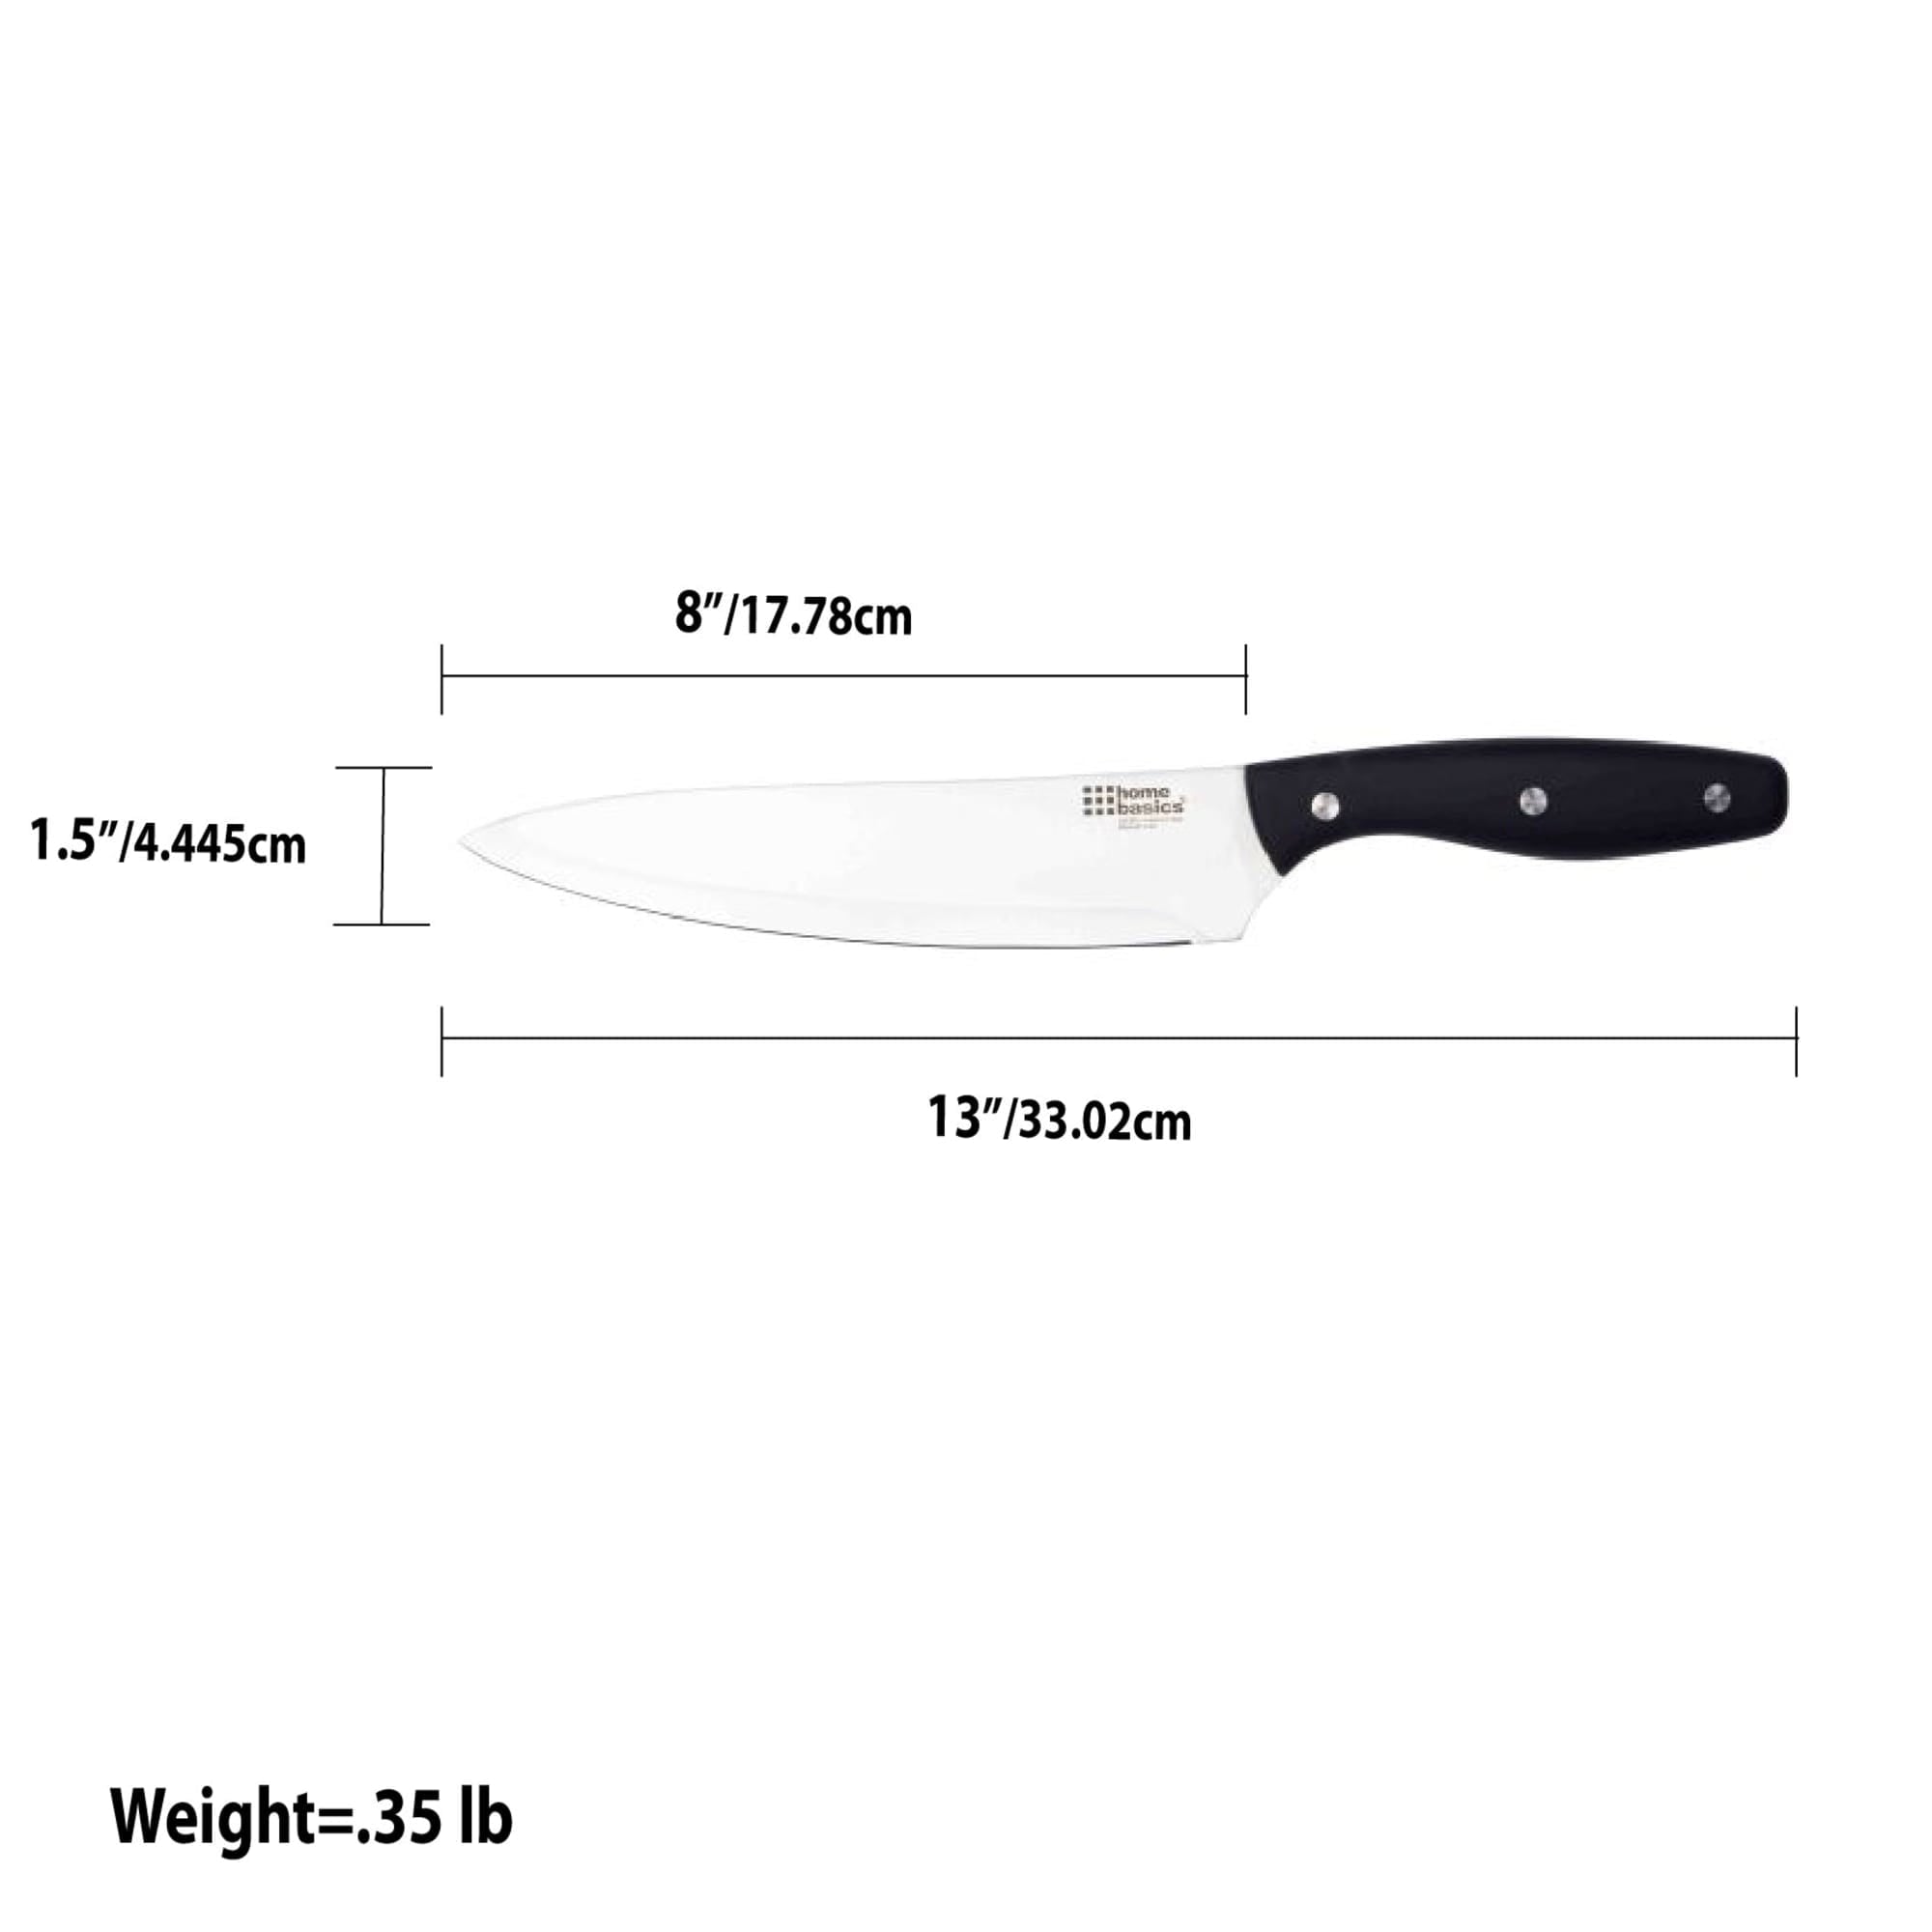 Home Basics 8" Chef Knife $3.00 EACH, CASE PACK OF 24